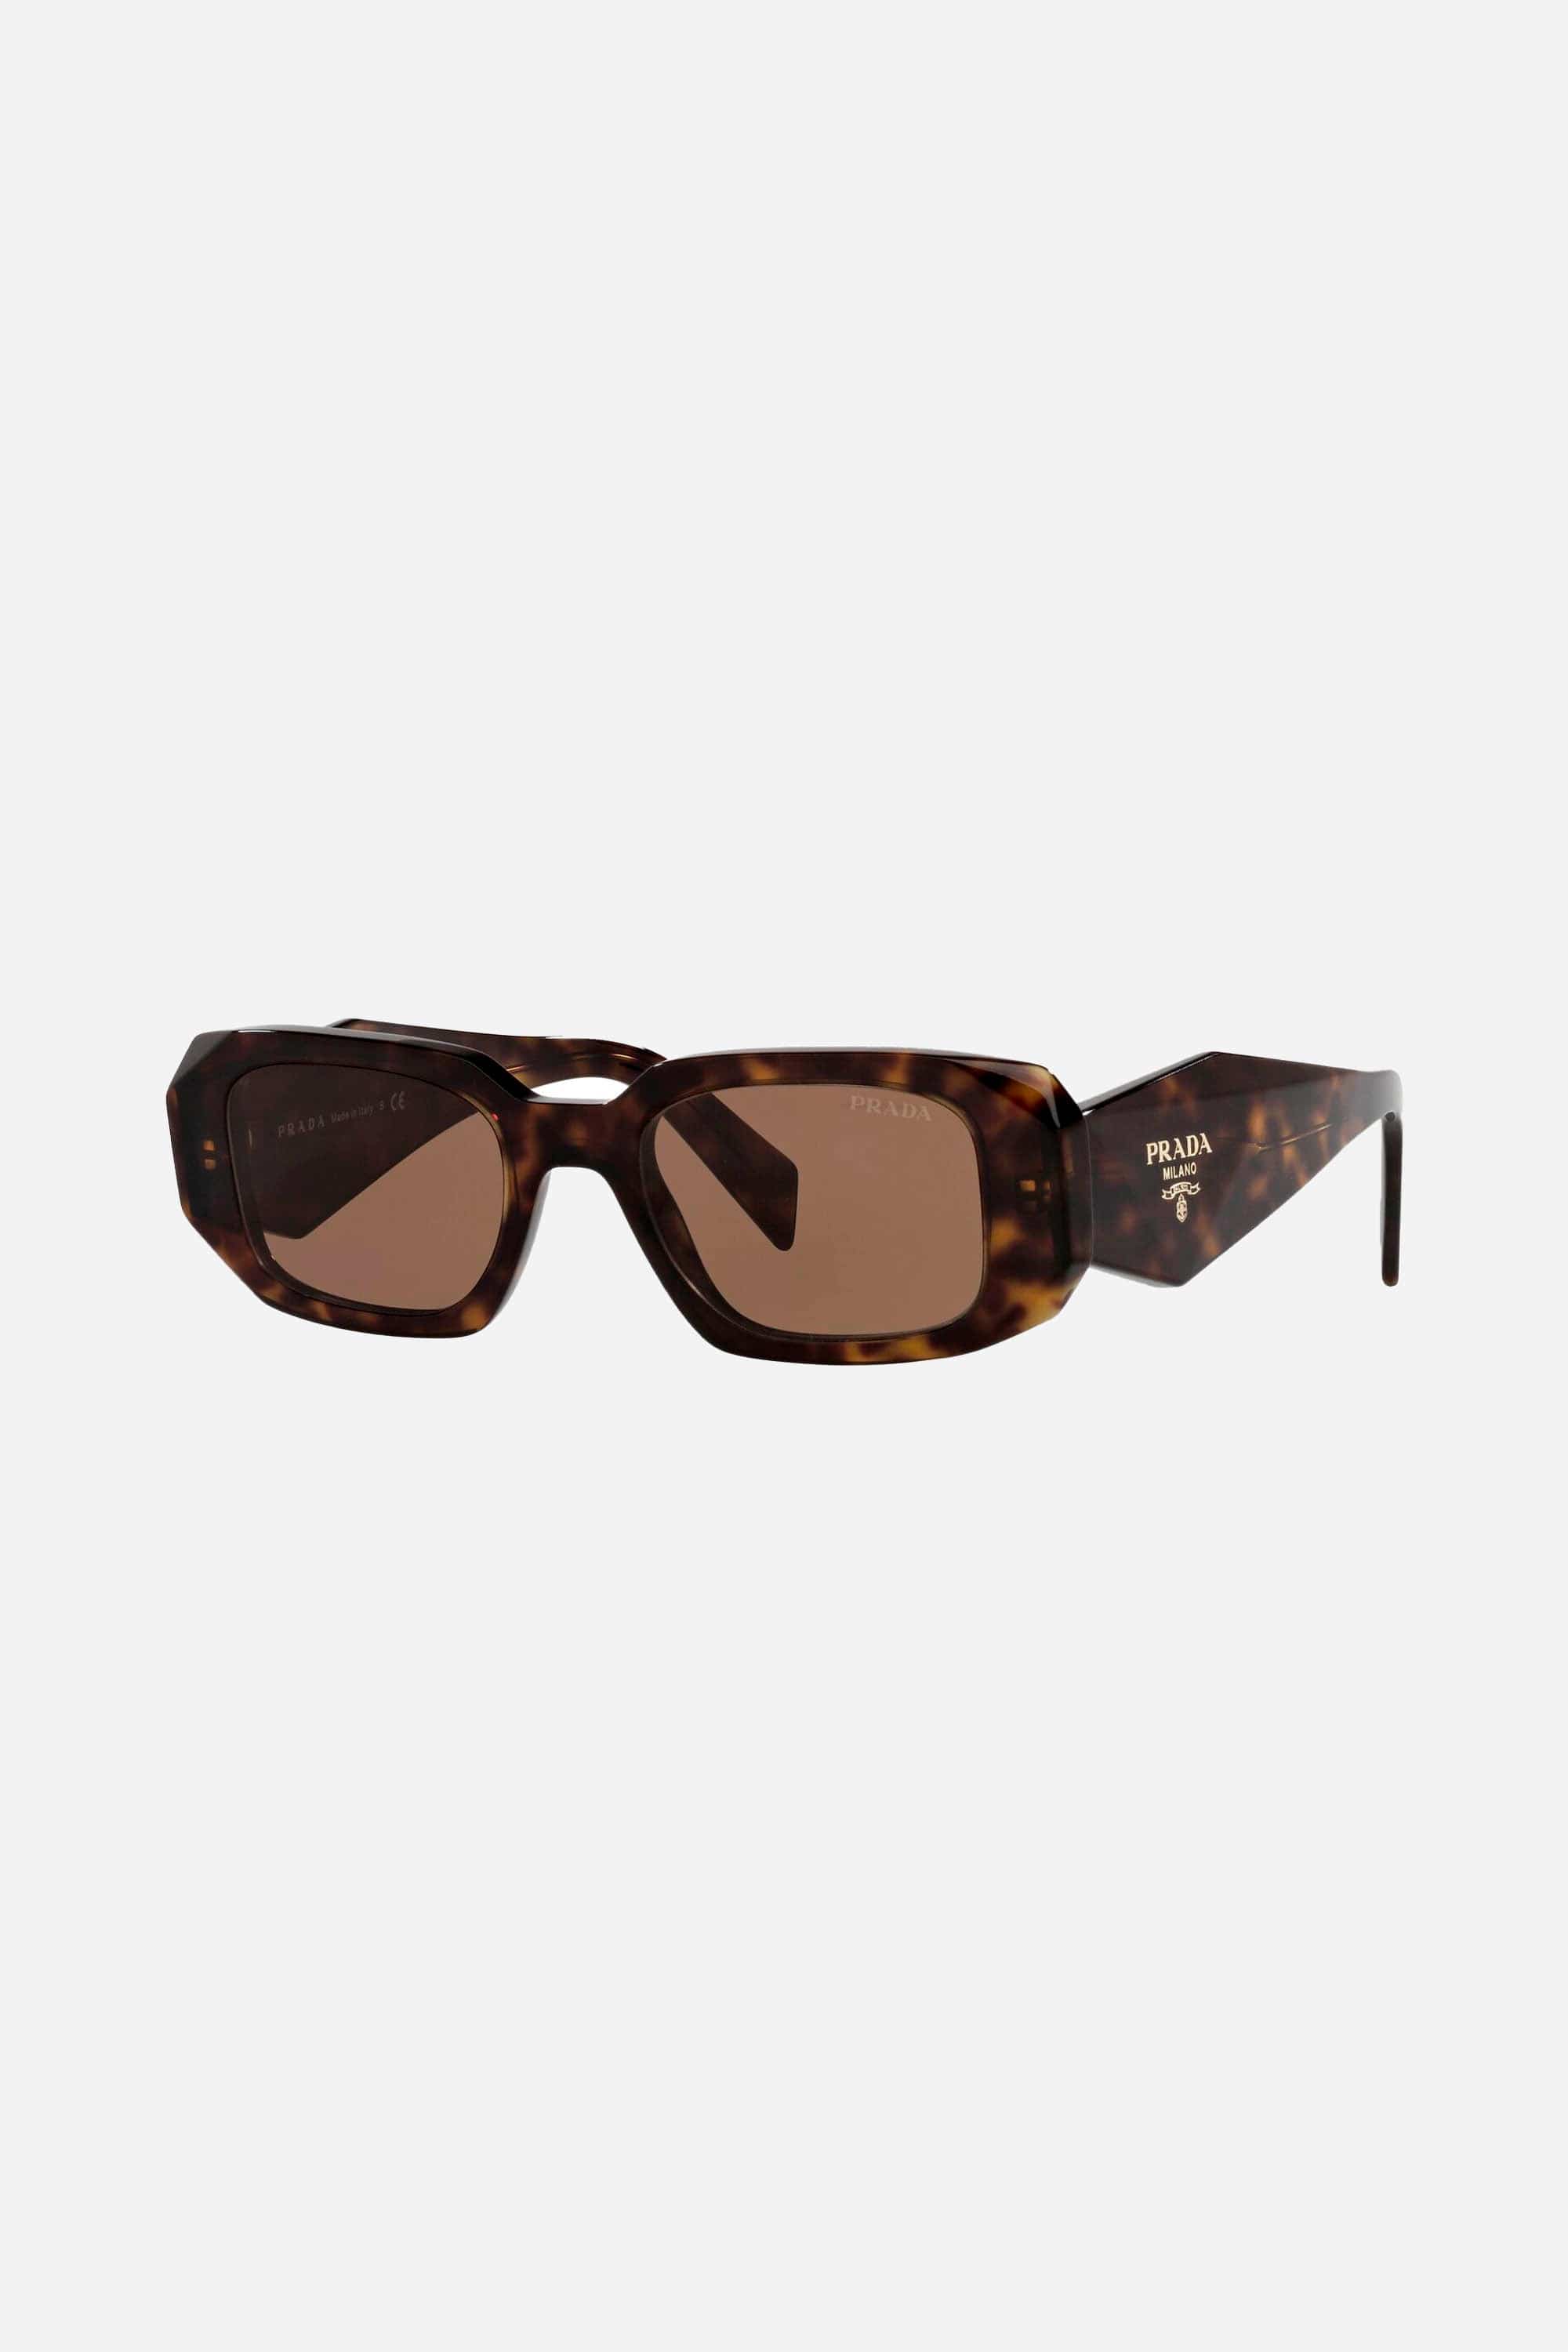 Prada symbol havana oval sunglasses - Eyewear Club